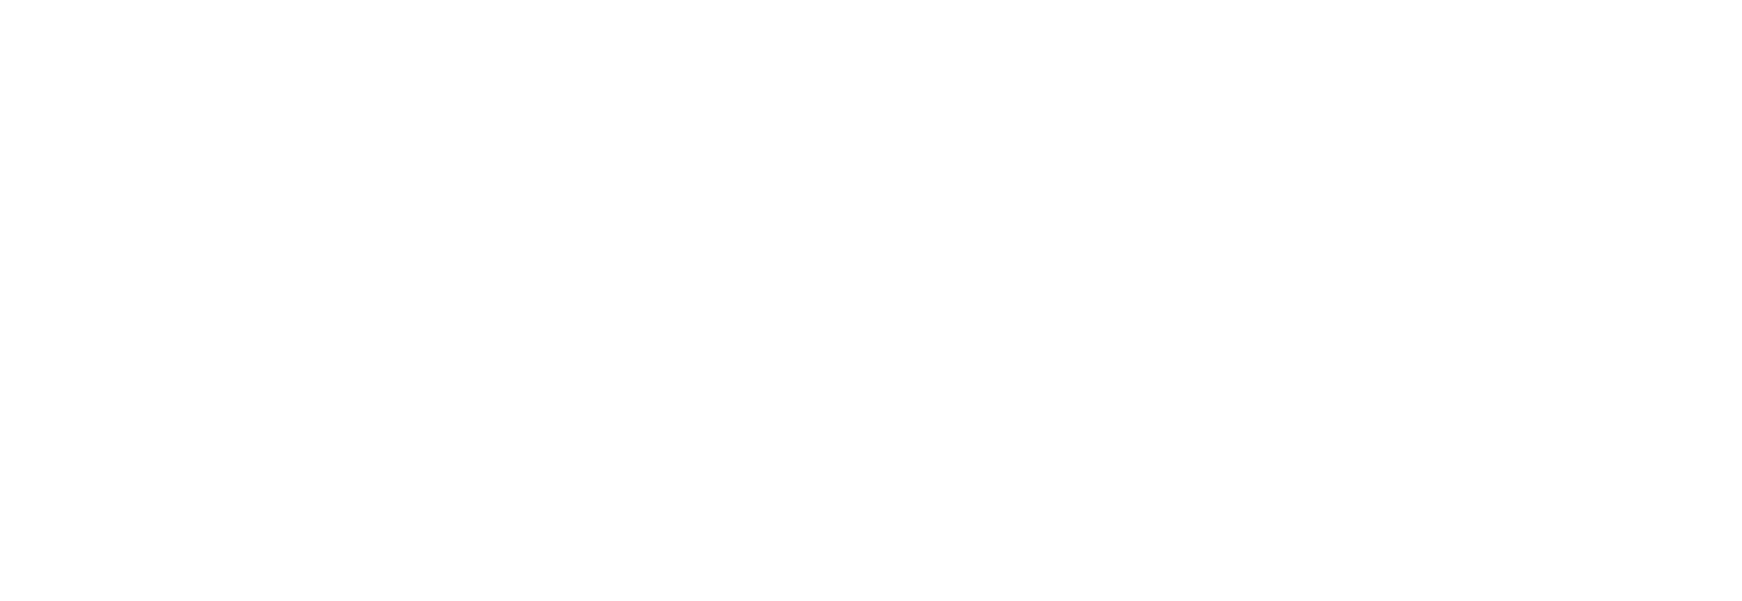 Wisbix logo white